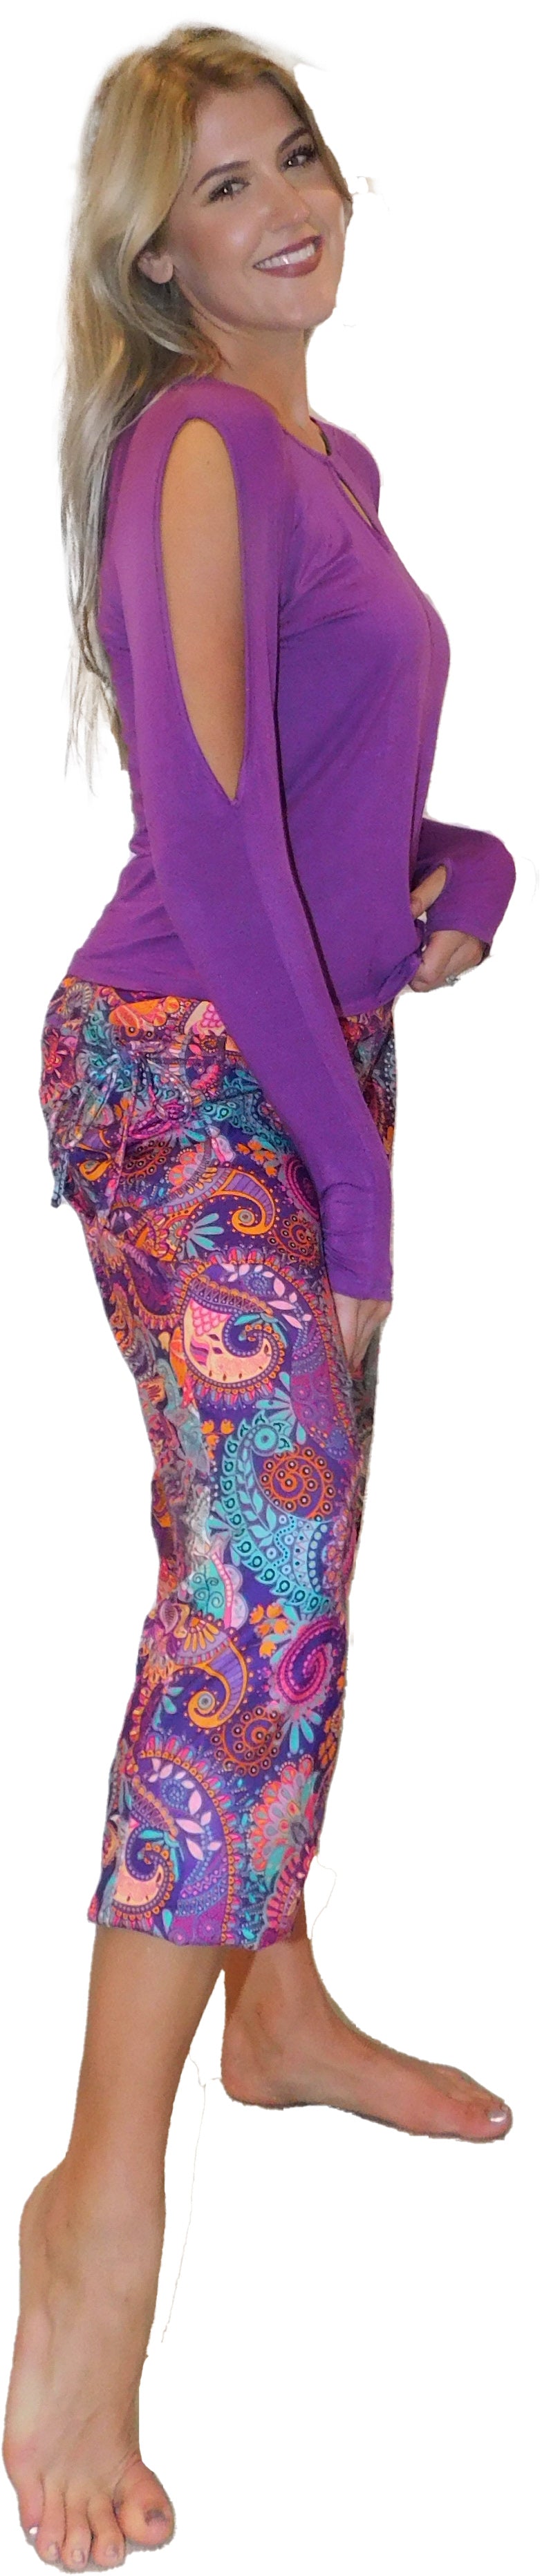 YOGAZ Batik Print Pants with our Signature Pocket in Pocket design